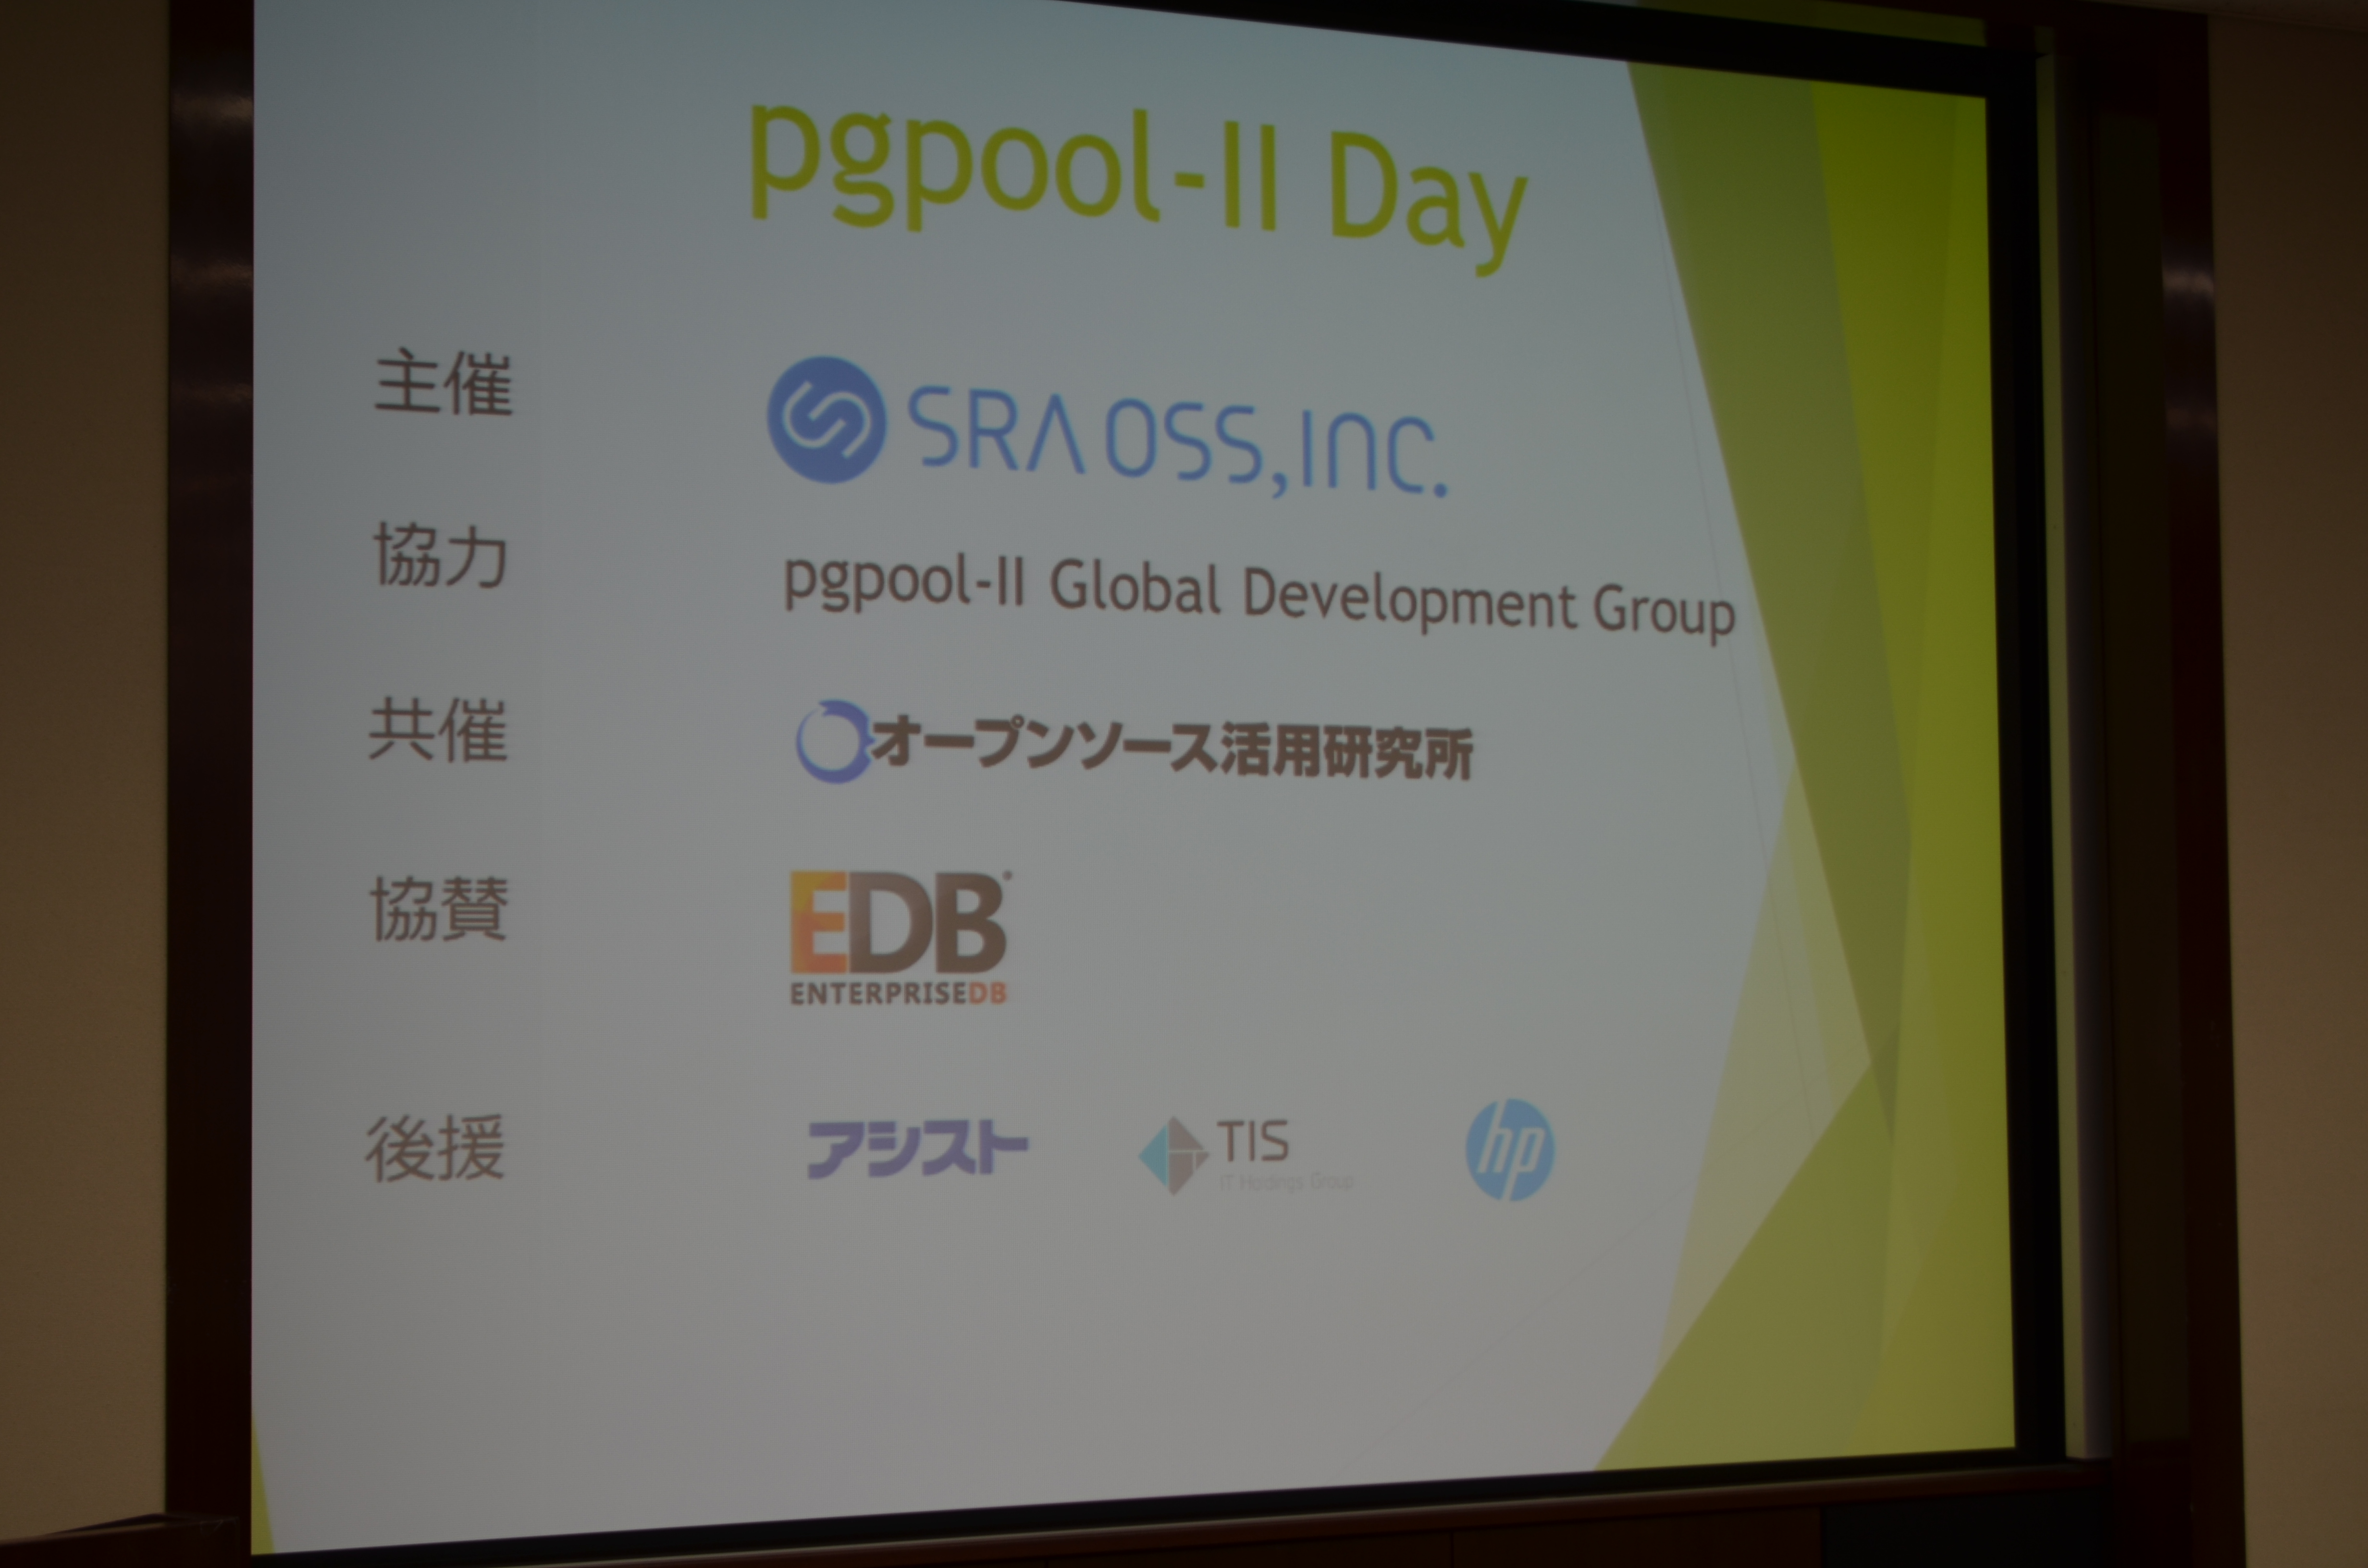 pgpool-II-Day-2015-opening-slide.jpg